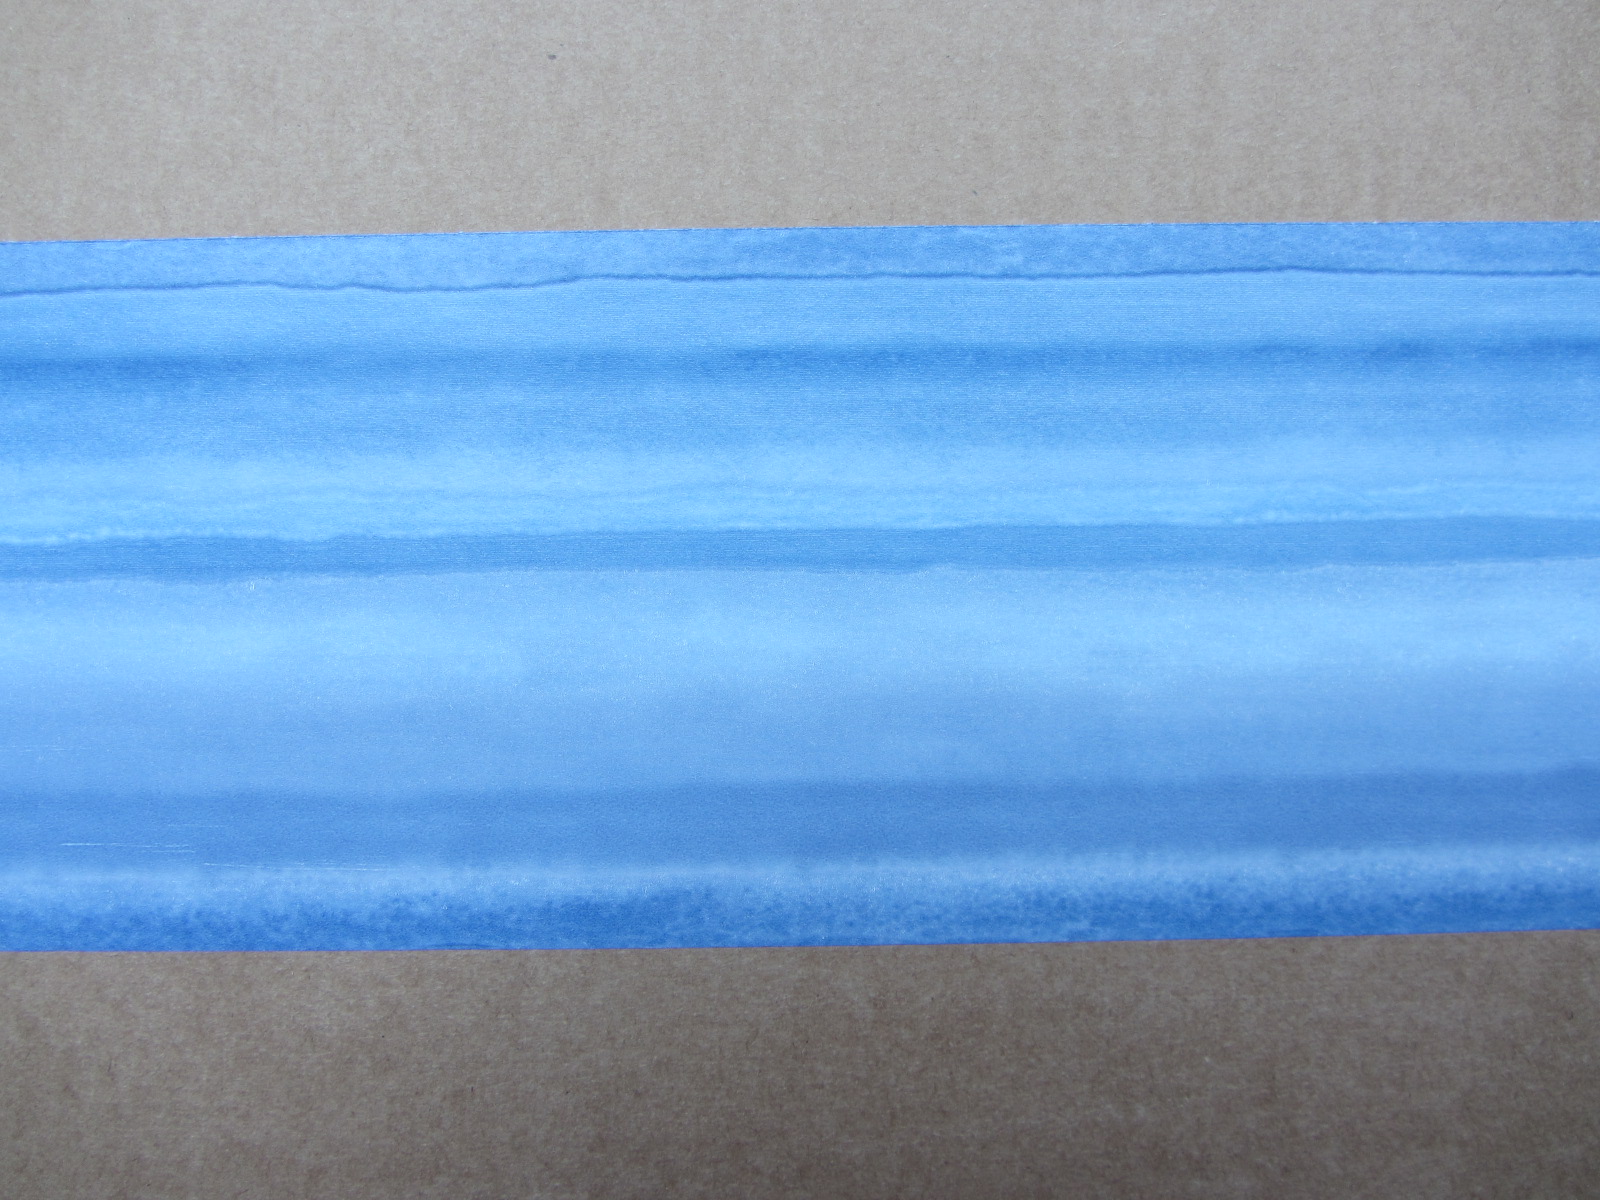 HORIZON SHADES OF BLUE WALLPAPER BORDER SELF ADHESIVE BEDROOM 5 x 12 1600x1200